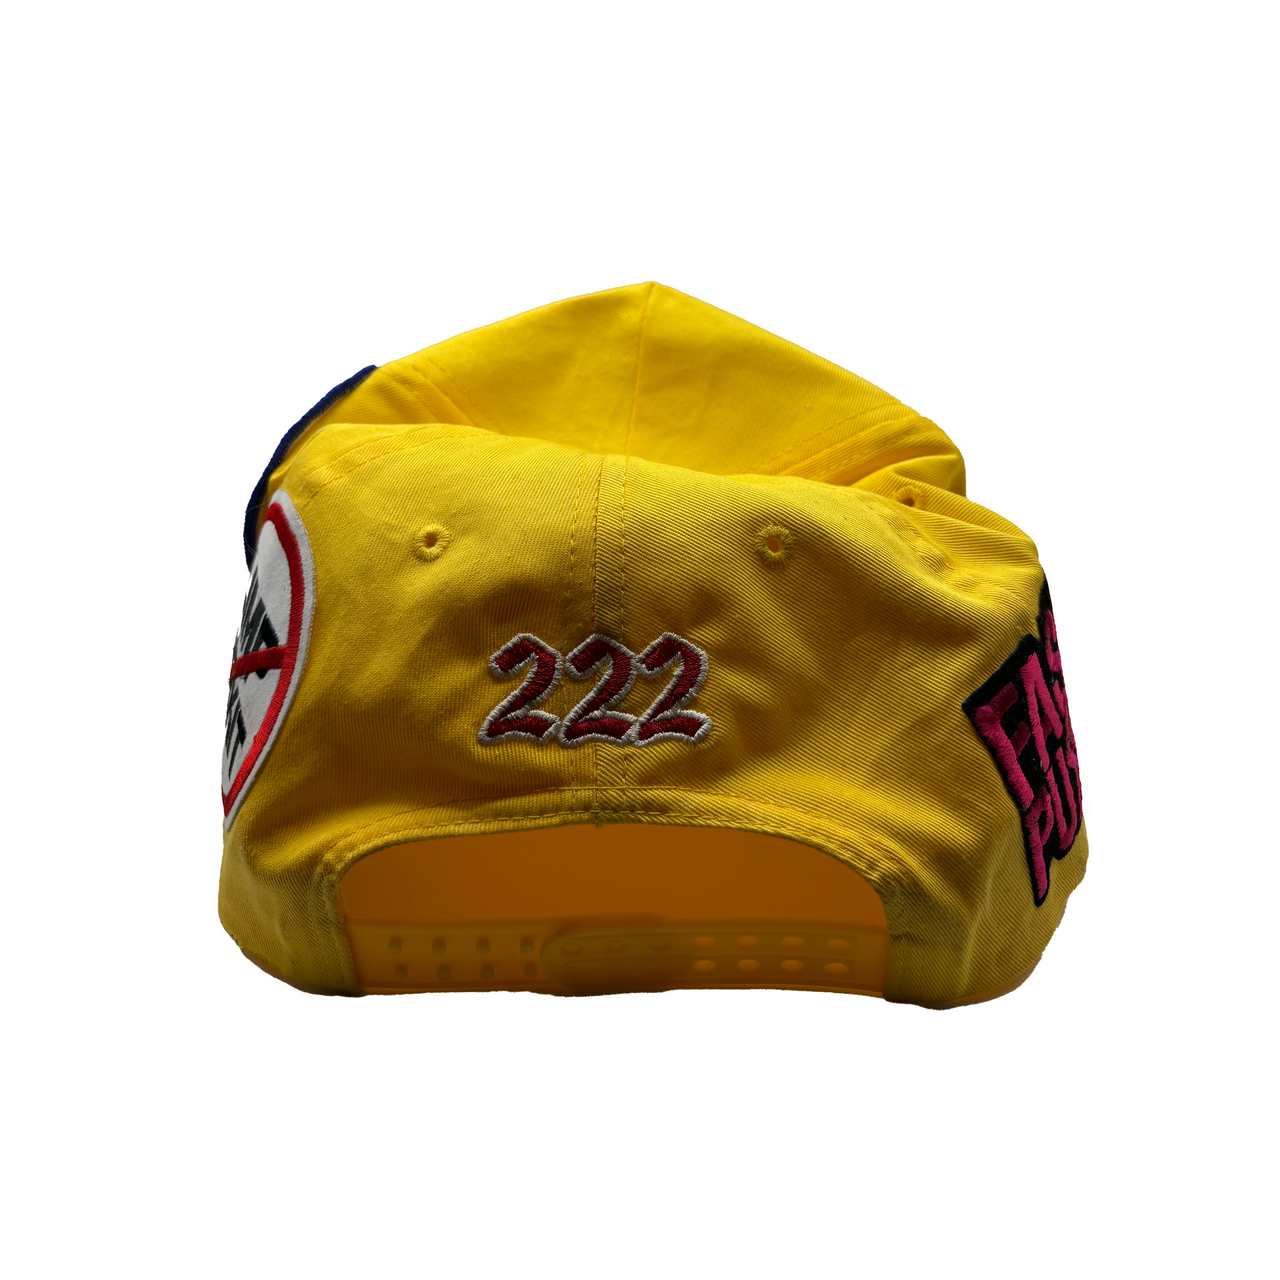 222 Trucker Hat Vintage Yellow